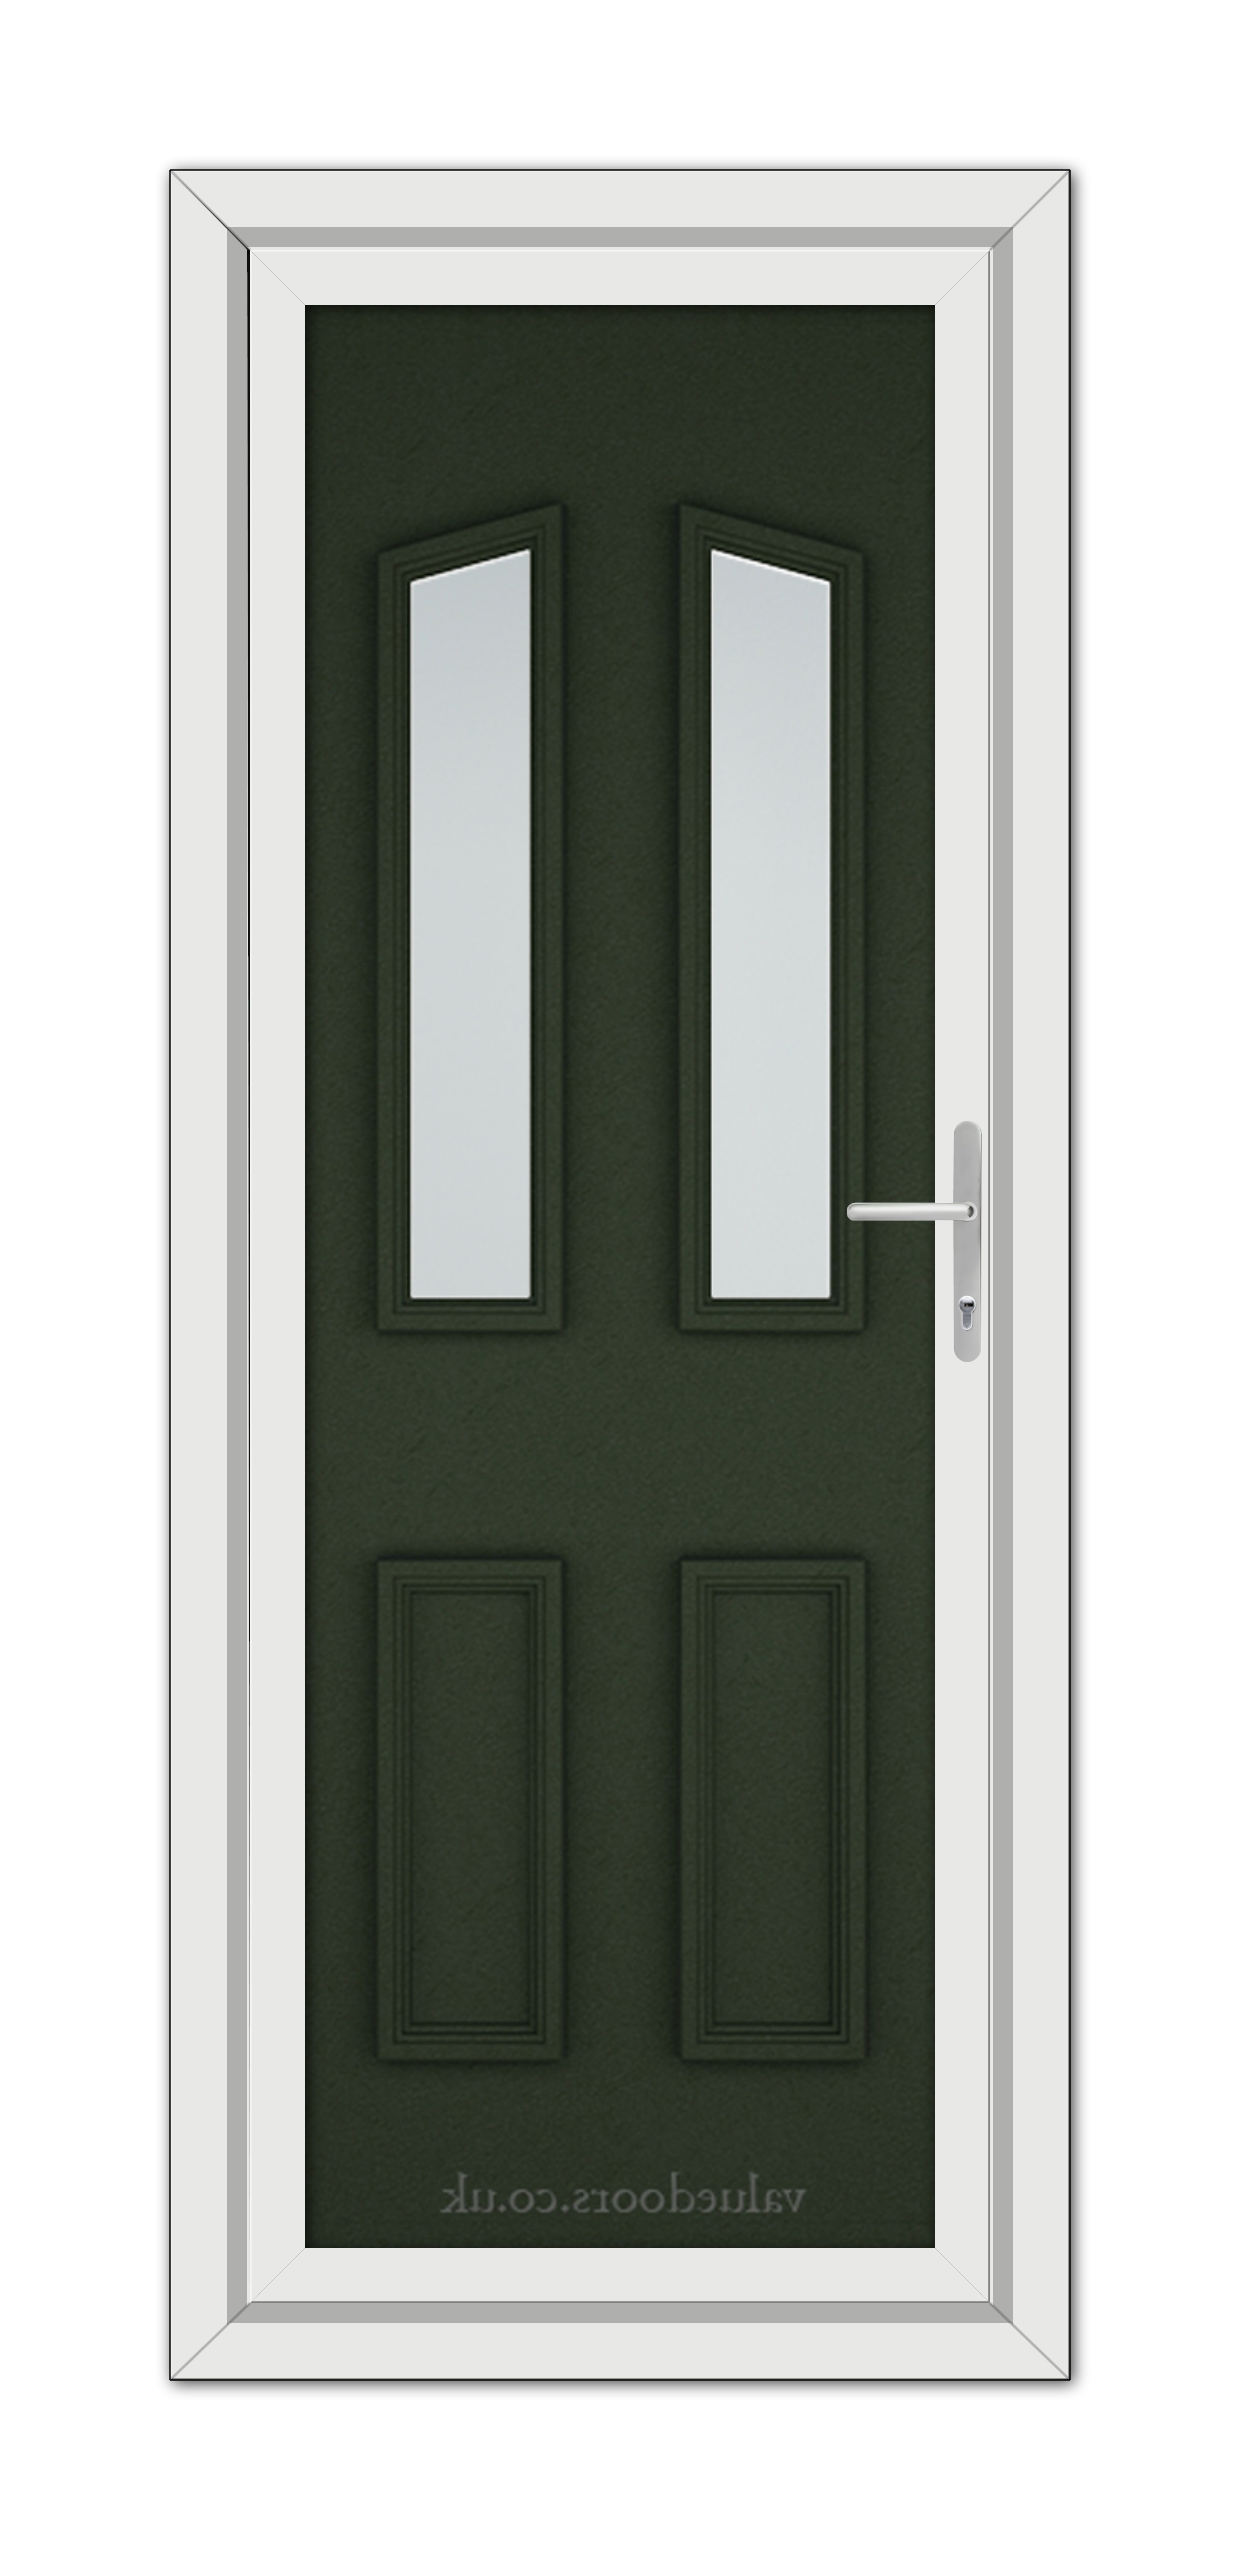 A Green Kensington uPVC Door with glass panels.